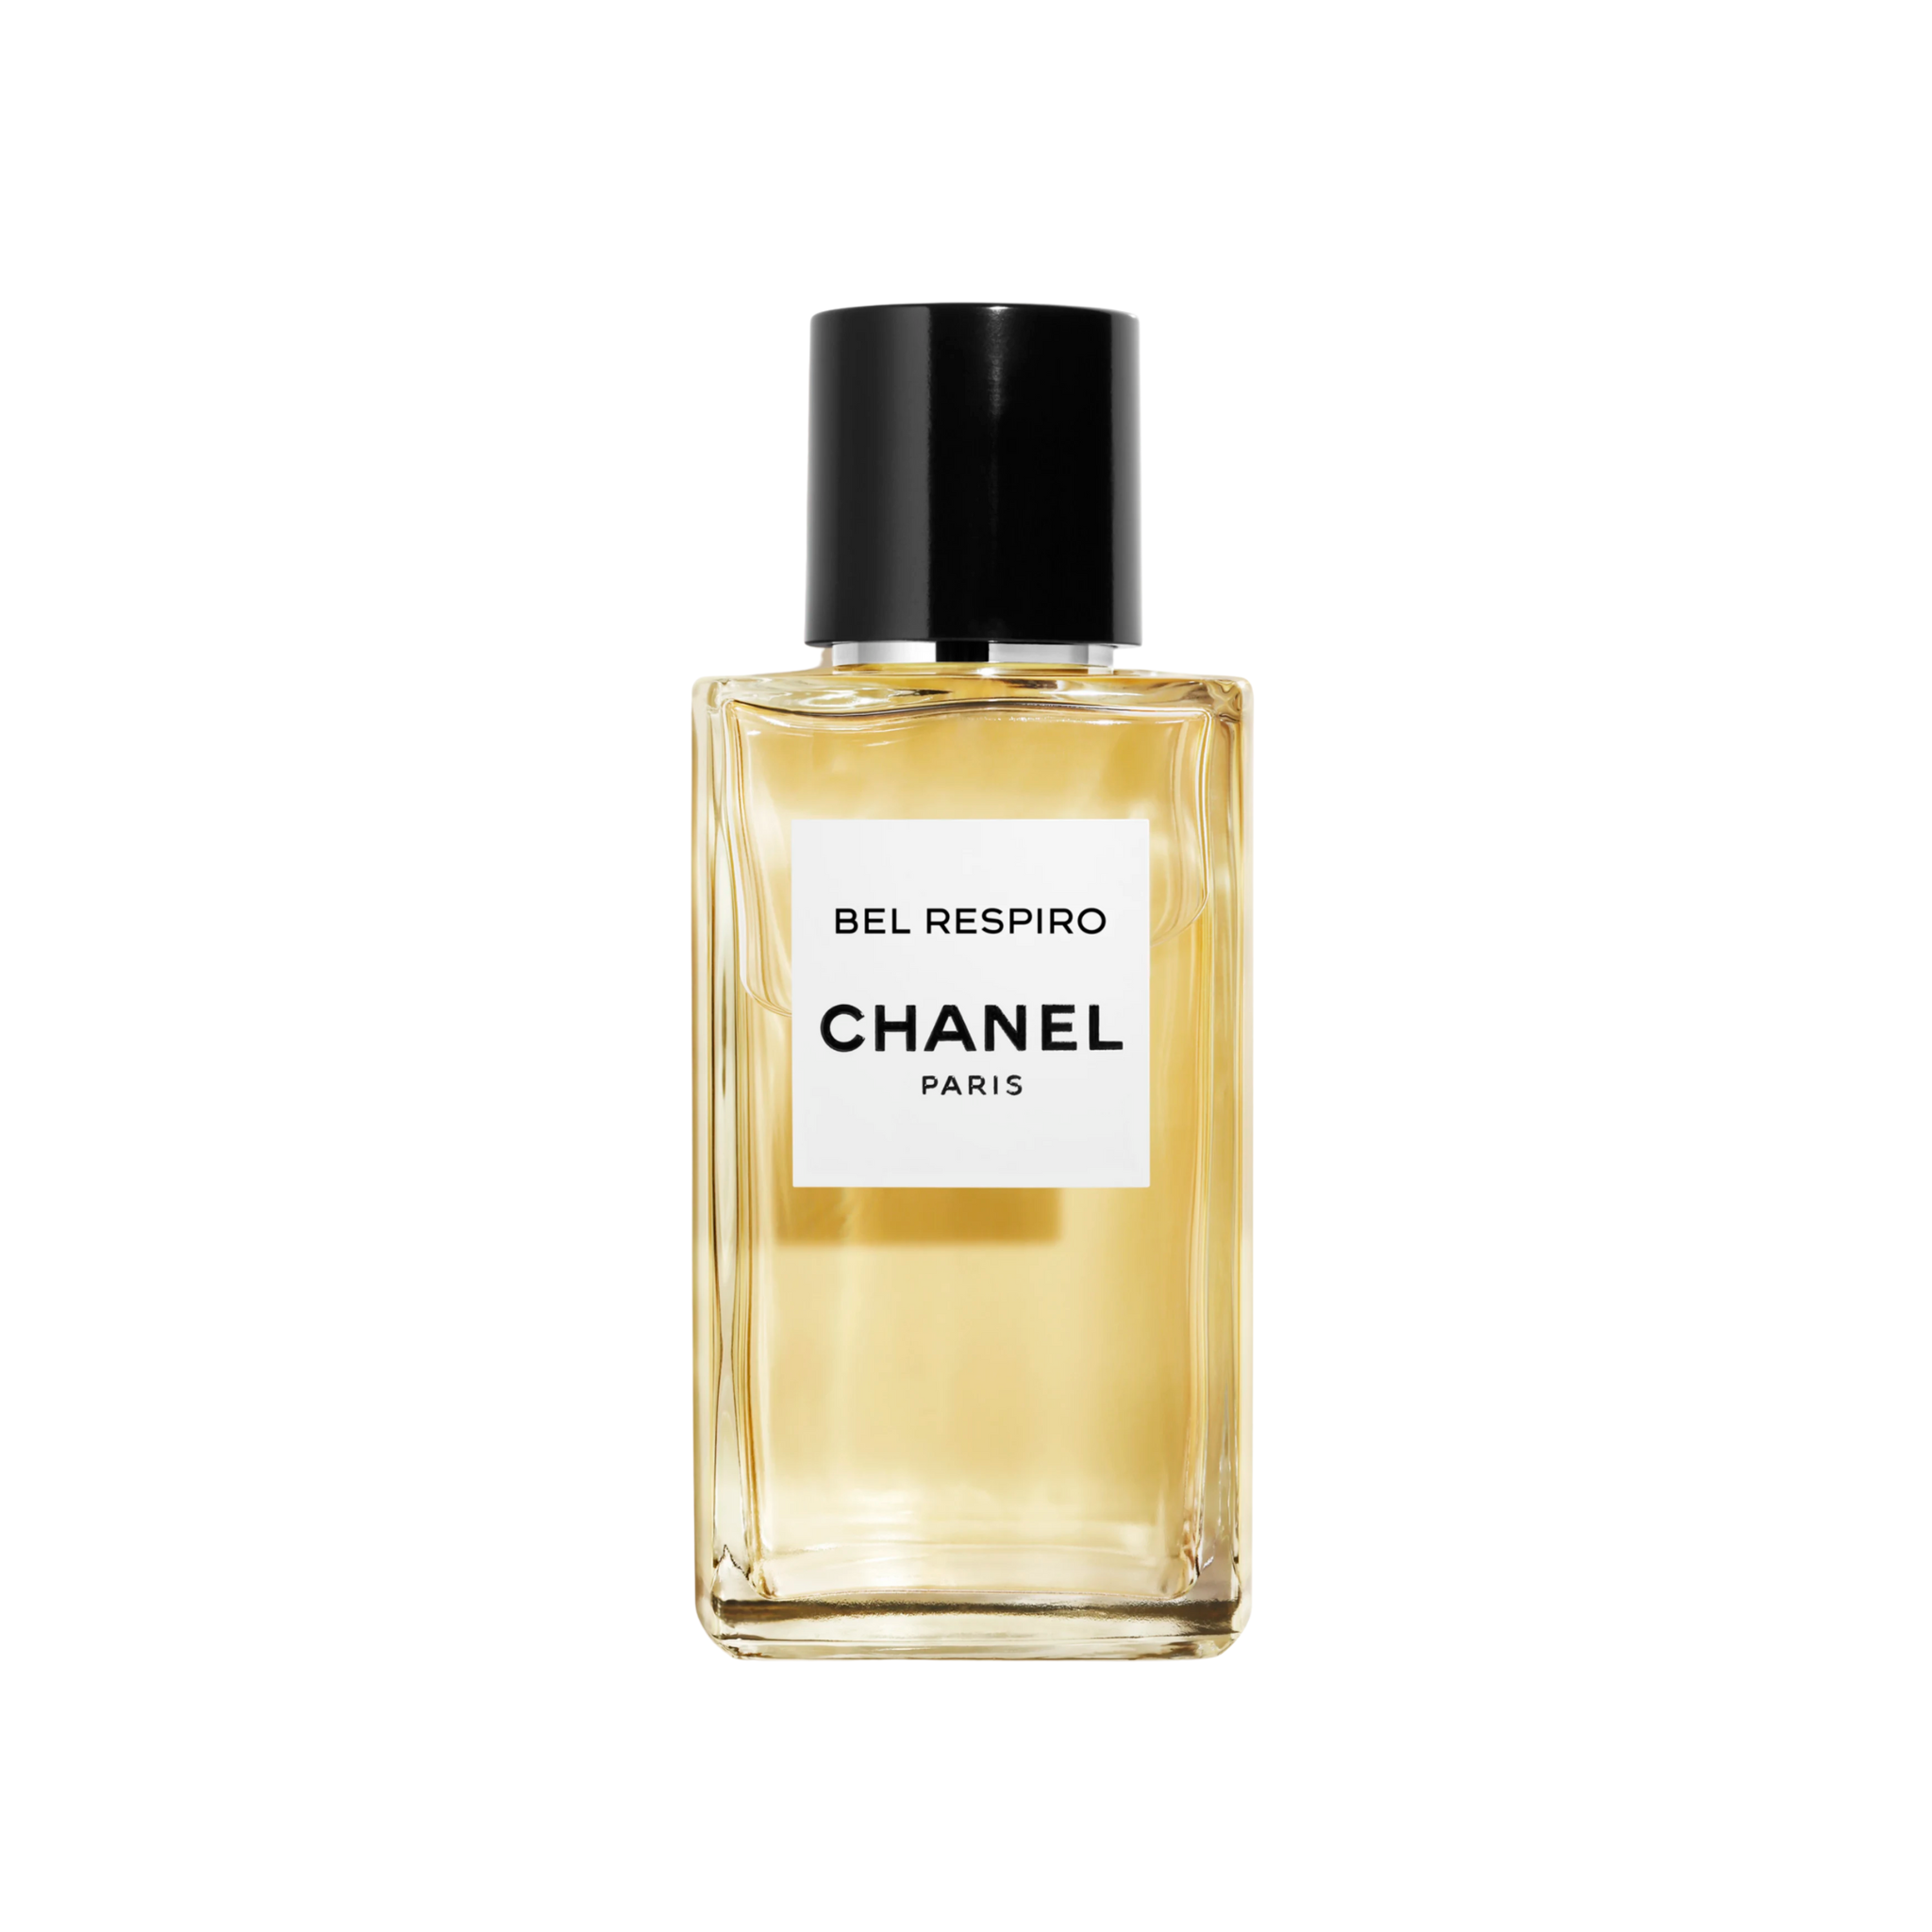 Chanel Bel Respiro Les De Eau de Parfum